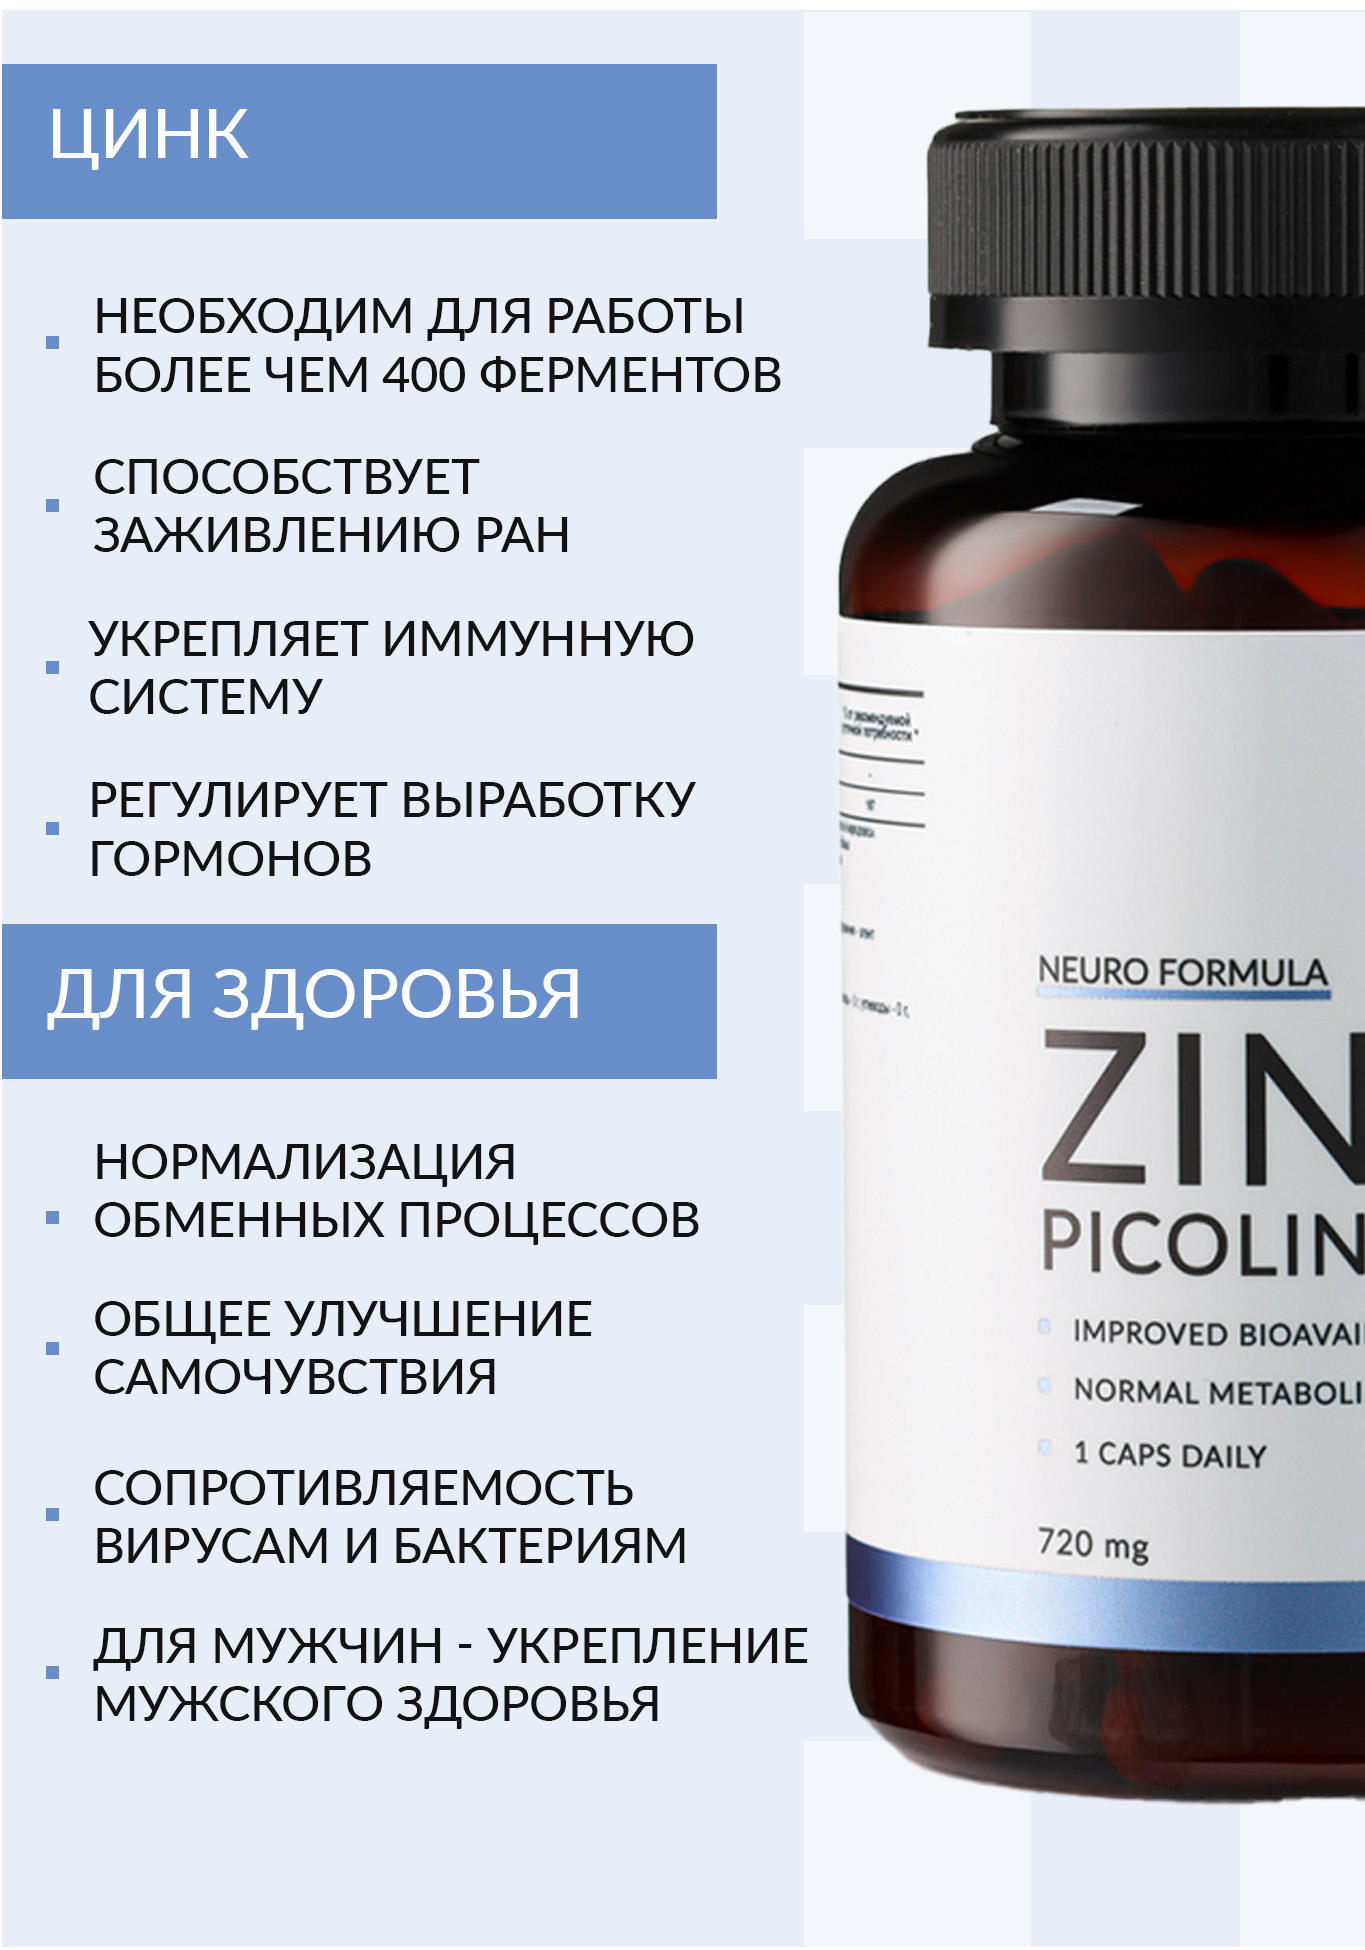 Zink picolinate (Пиколинат цинка) NUTRIPOLIS - фото 3